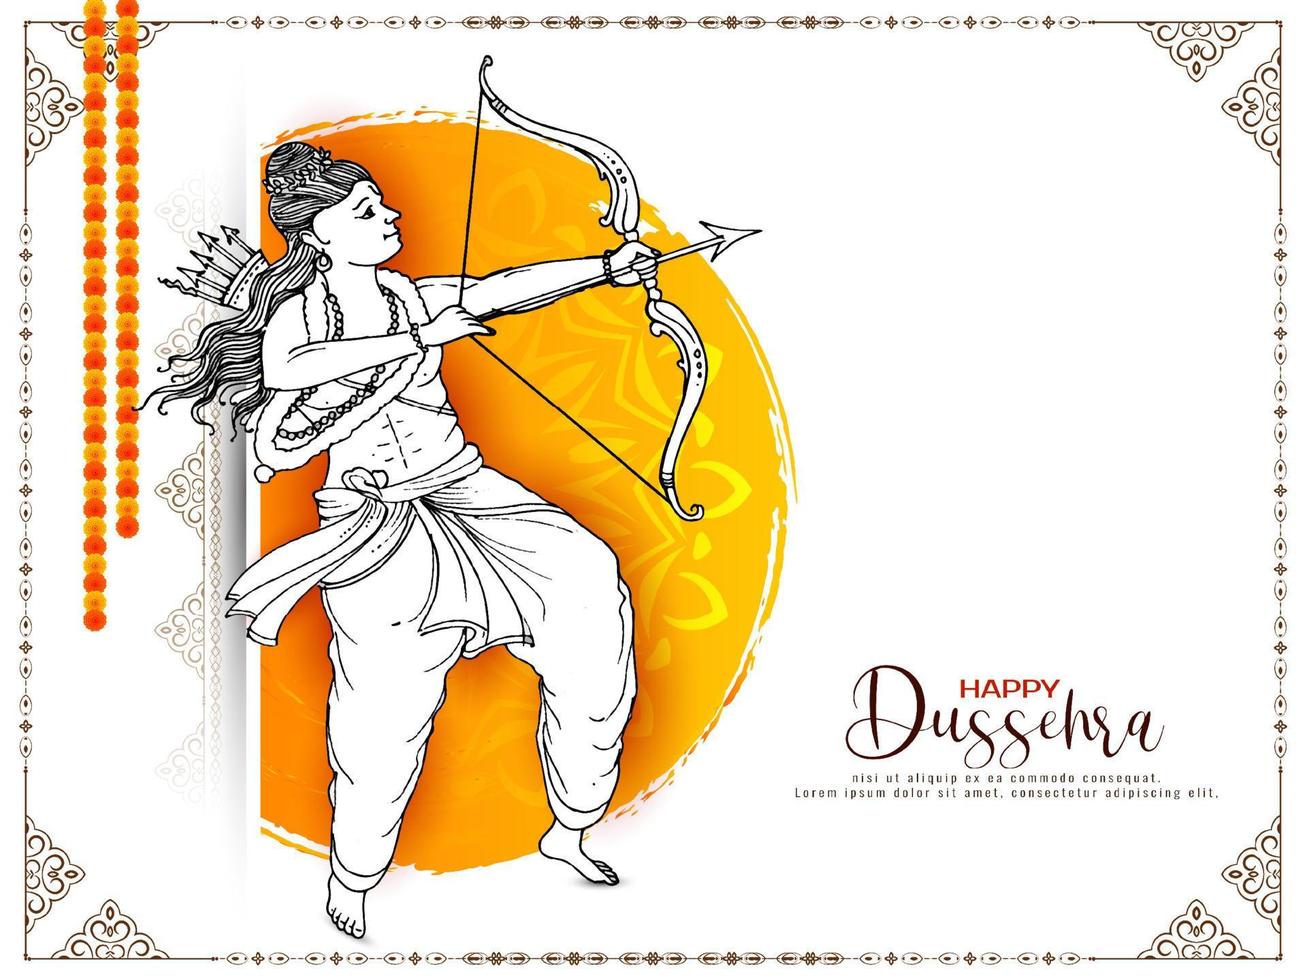 Happy Dussehra festival card with lord Rama killing Ravana concept vector